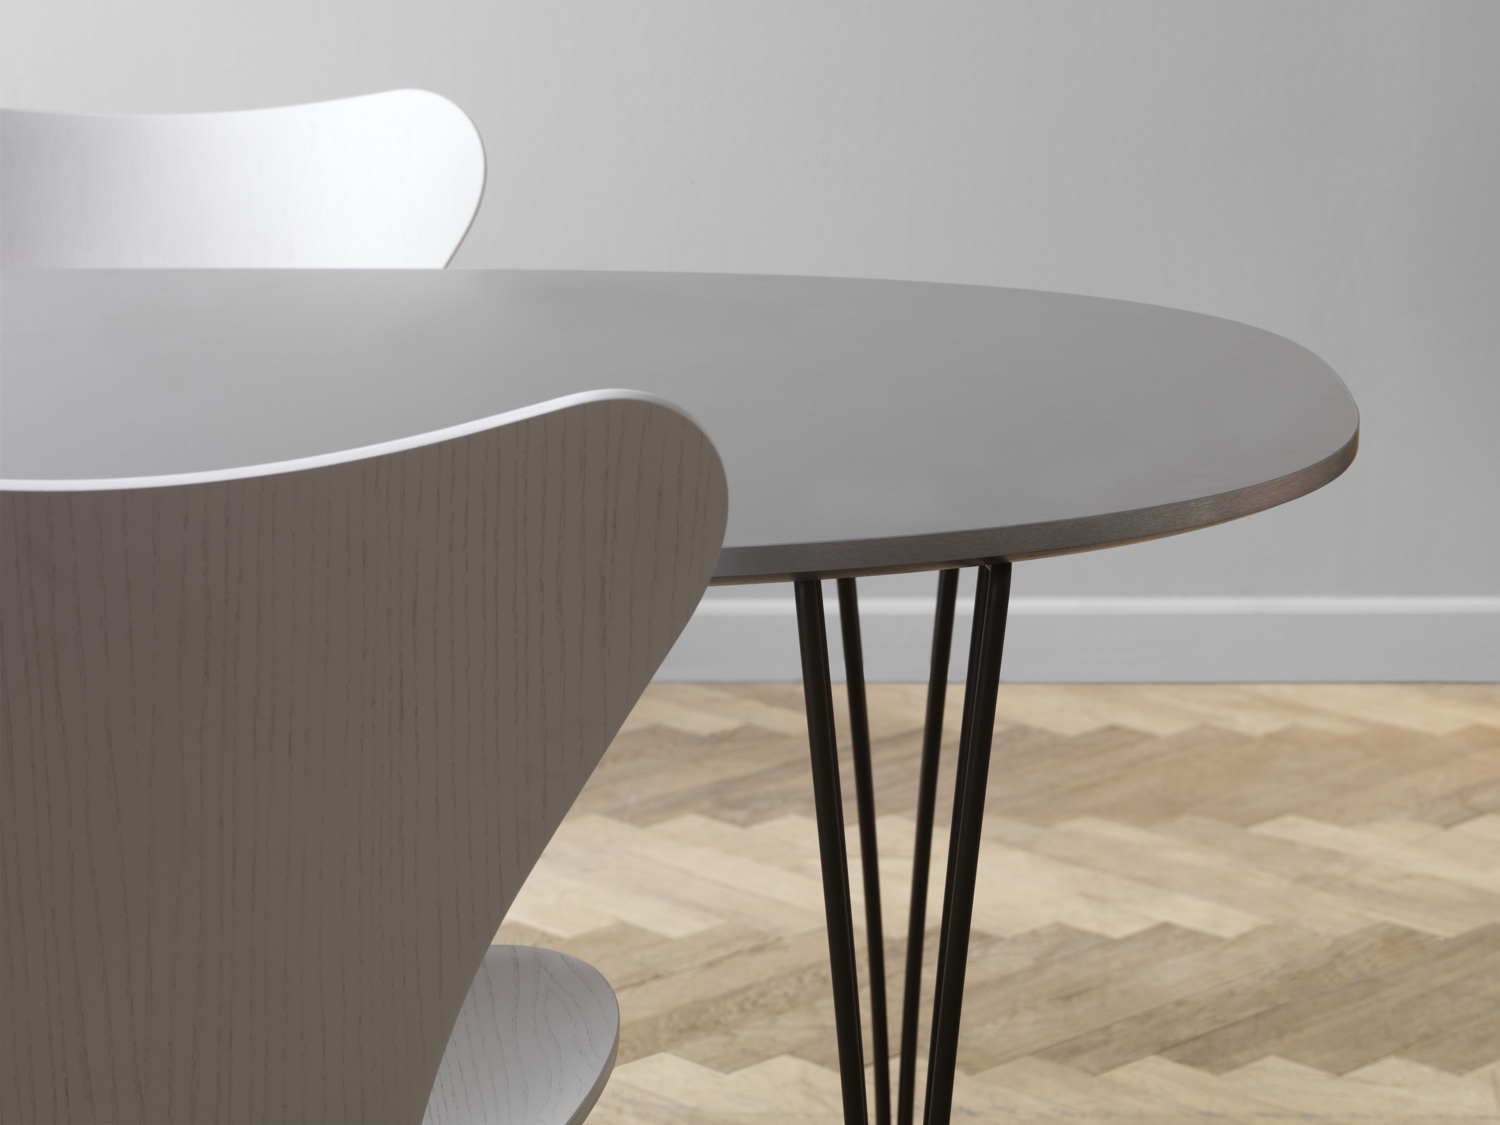 Super-Elliptical™ table in grey laminate